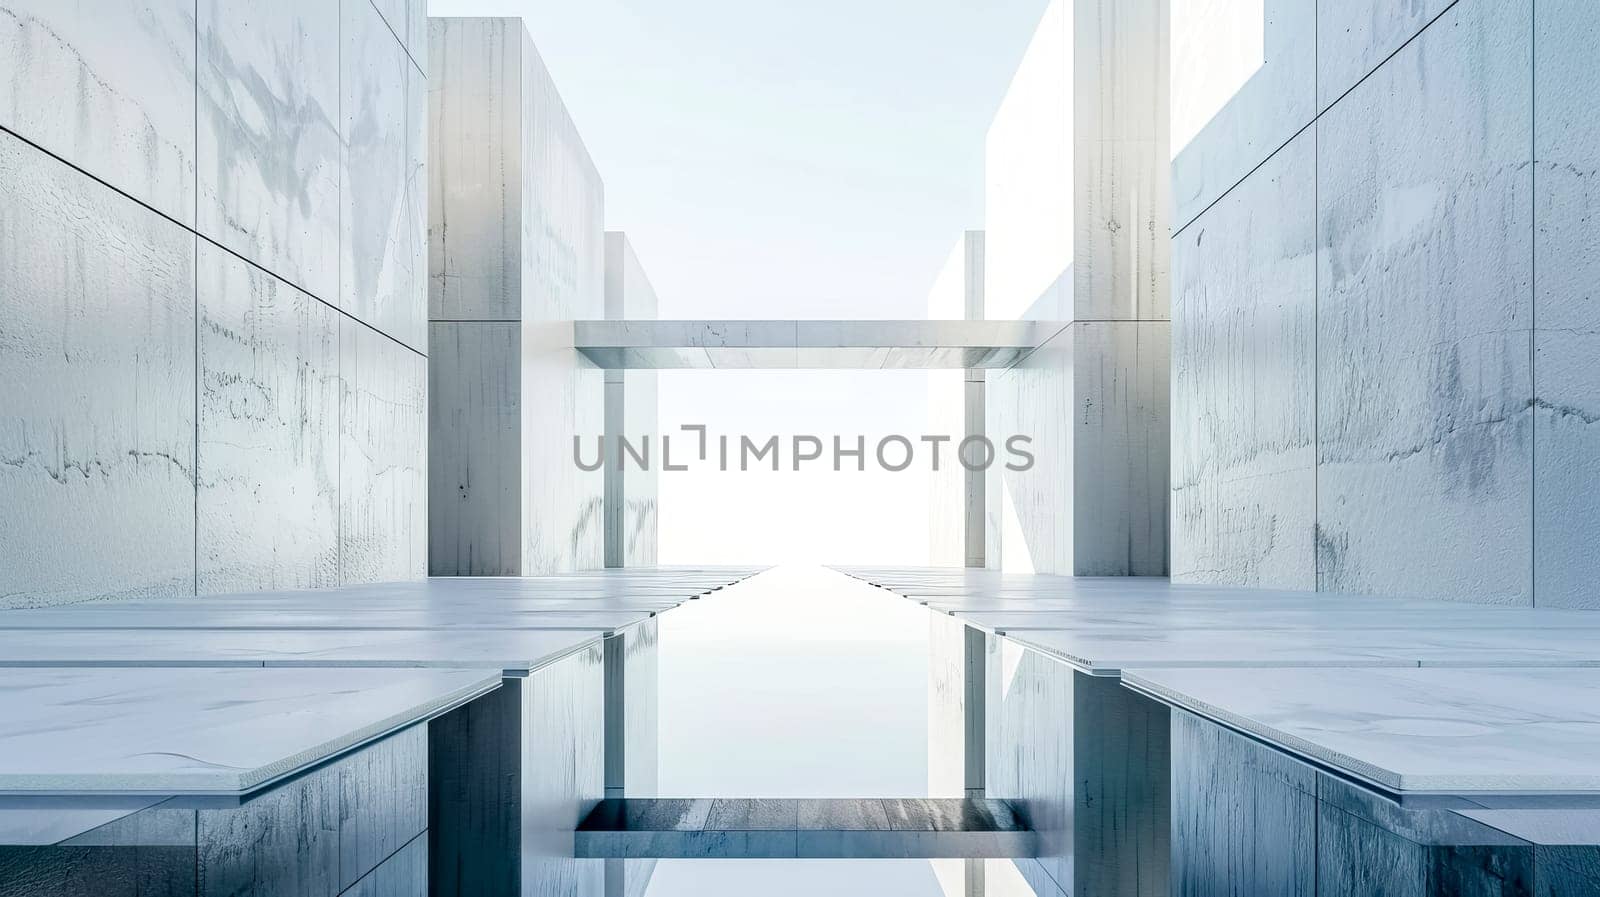 Sleek corridor with a futuristic, infinite perspective in a minimalist architectural design